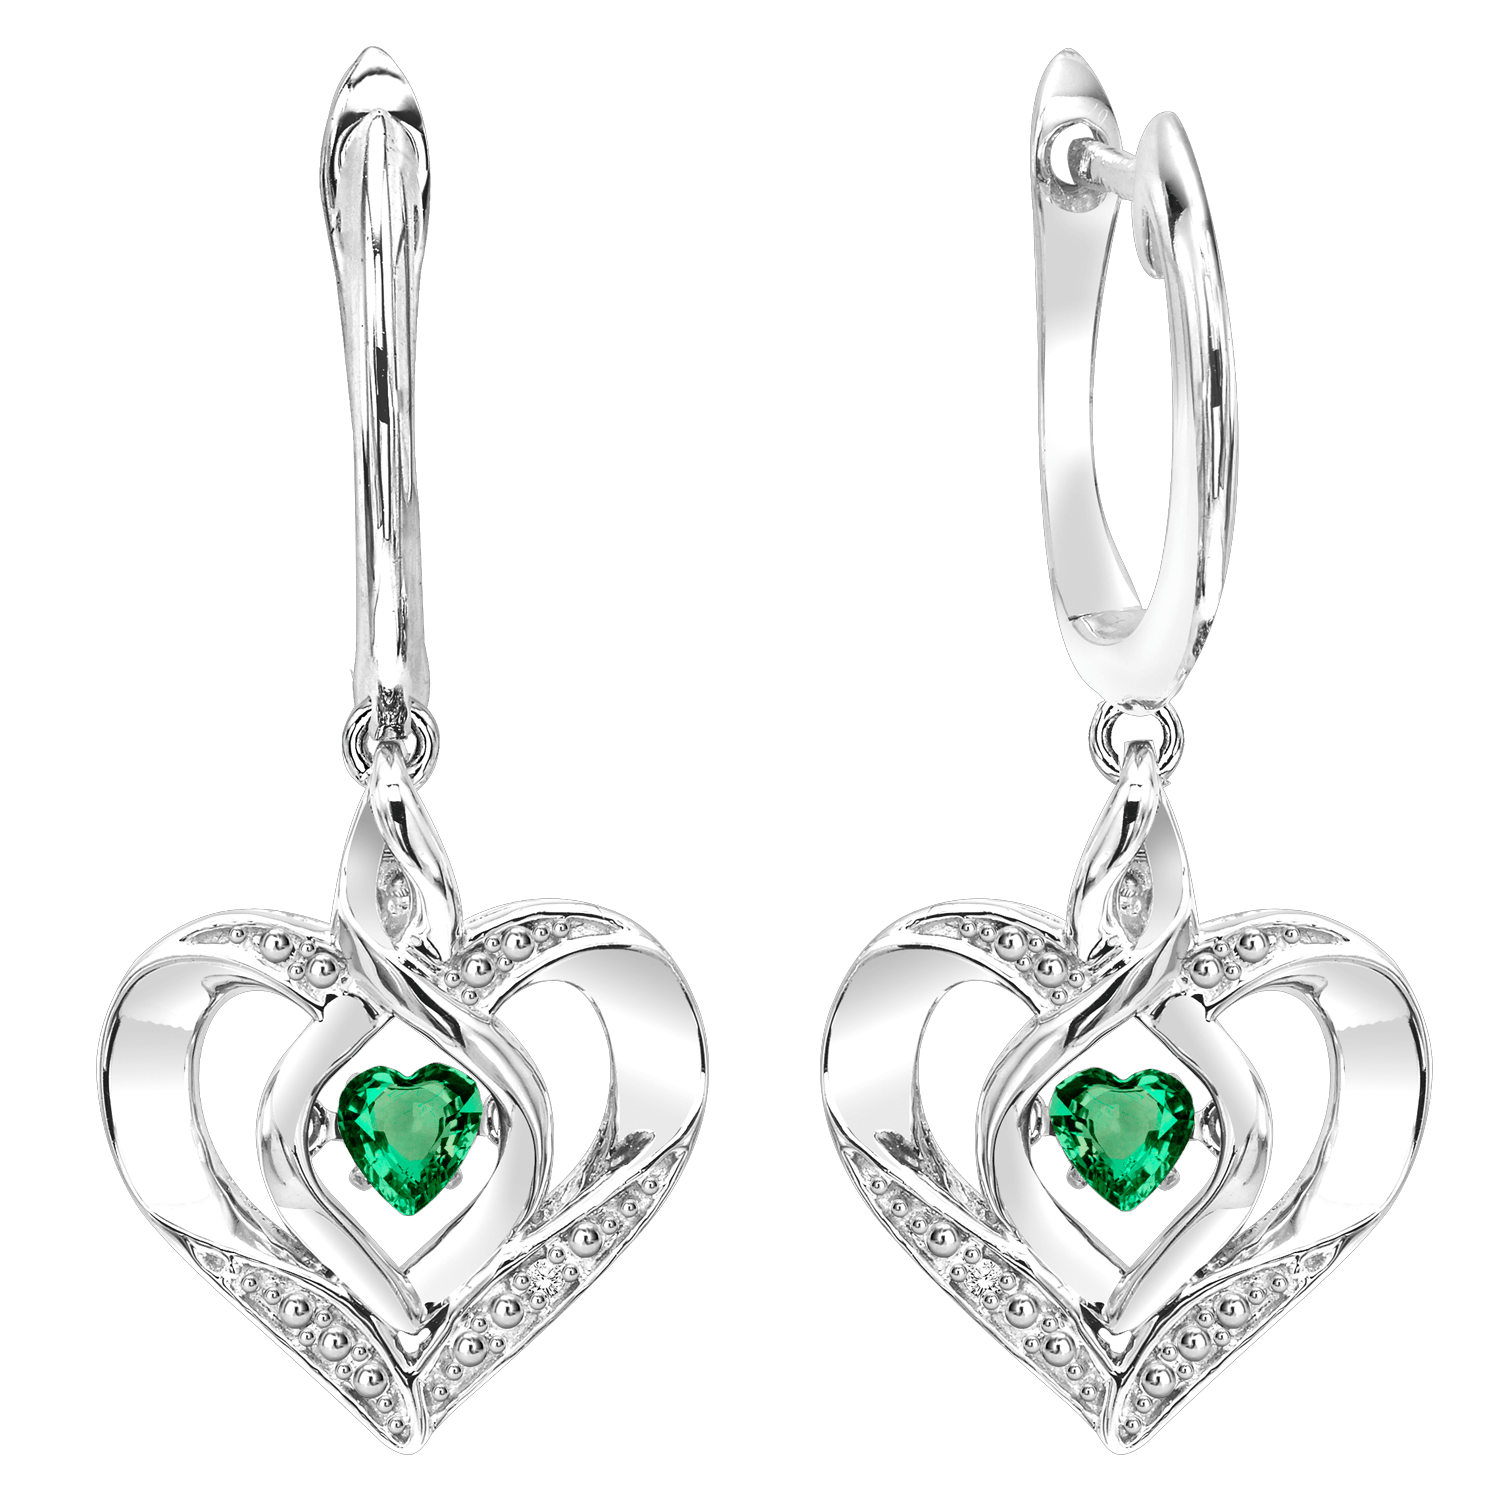 BW James Jewelers Earrings 16 Page Christmas Catalog Offer SS Diamond ROL-Birthst Heart Emerald Basics Earring